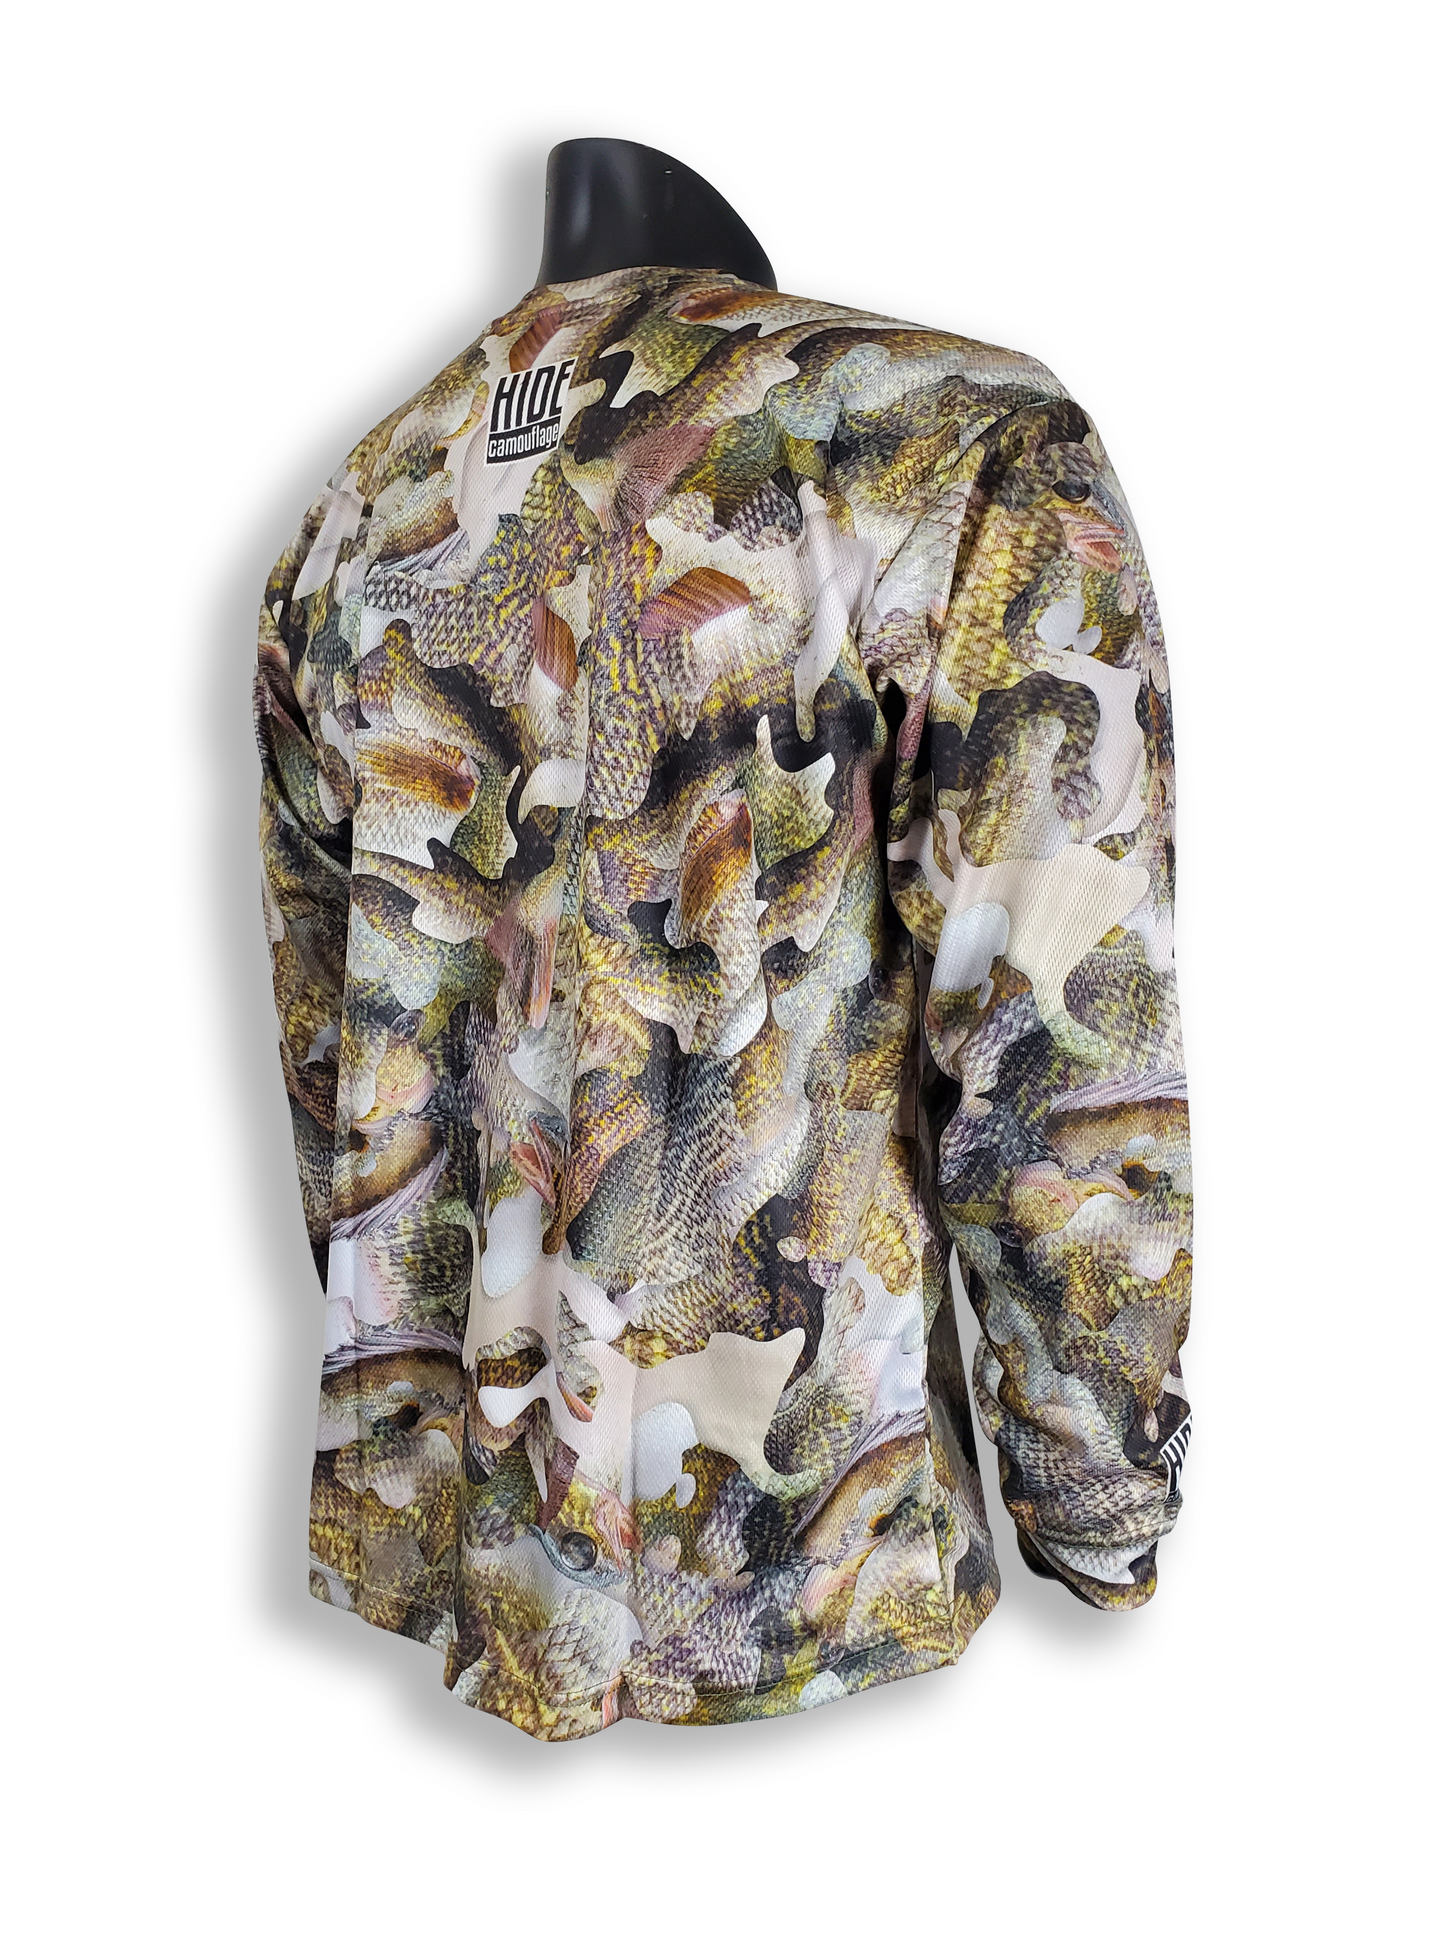 LIFESTYLE Fishing Apparel - Walleye Skin Camo - Long Sleeve Crew Collar T-Shirt